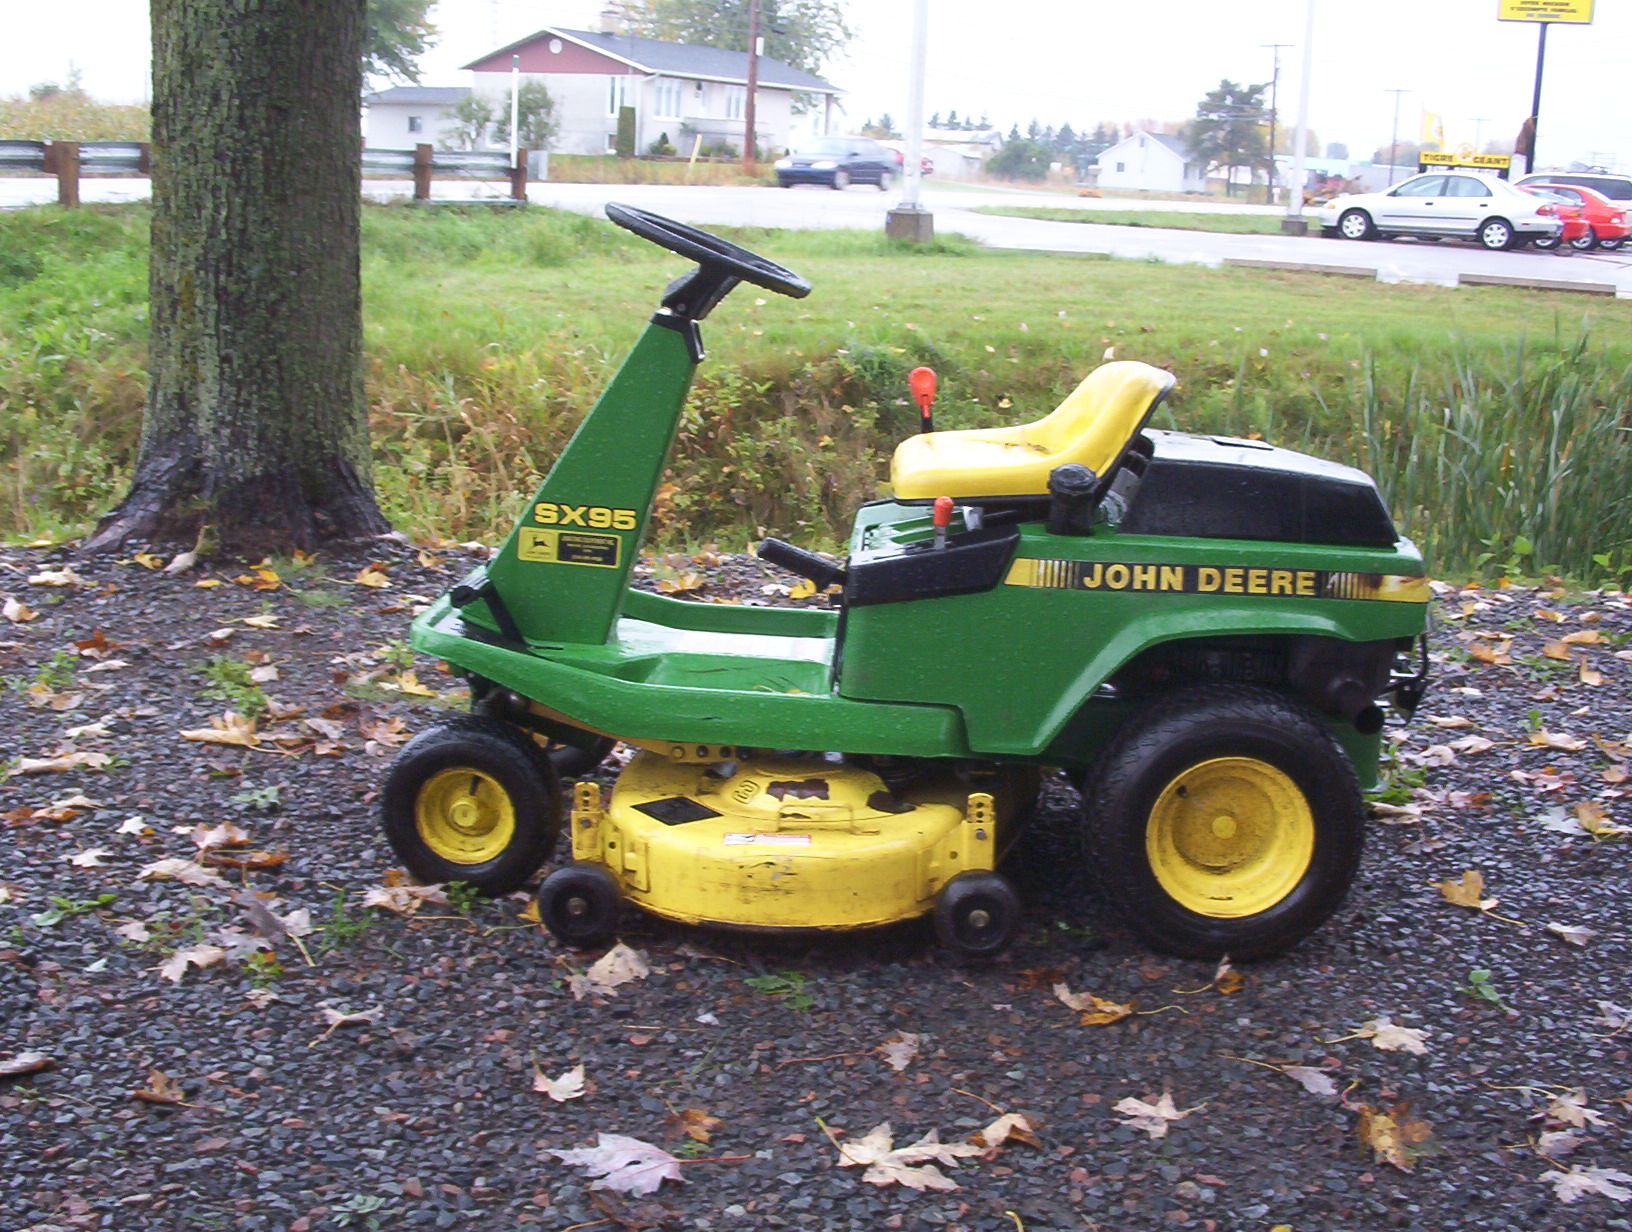 Pin John Deere Sx95 Riding Lawn Mower Price 42500 For Sale In Wichita